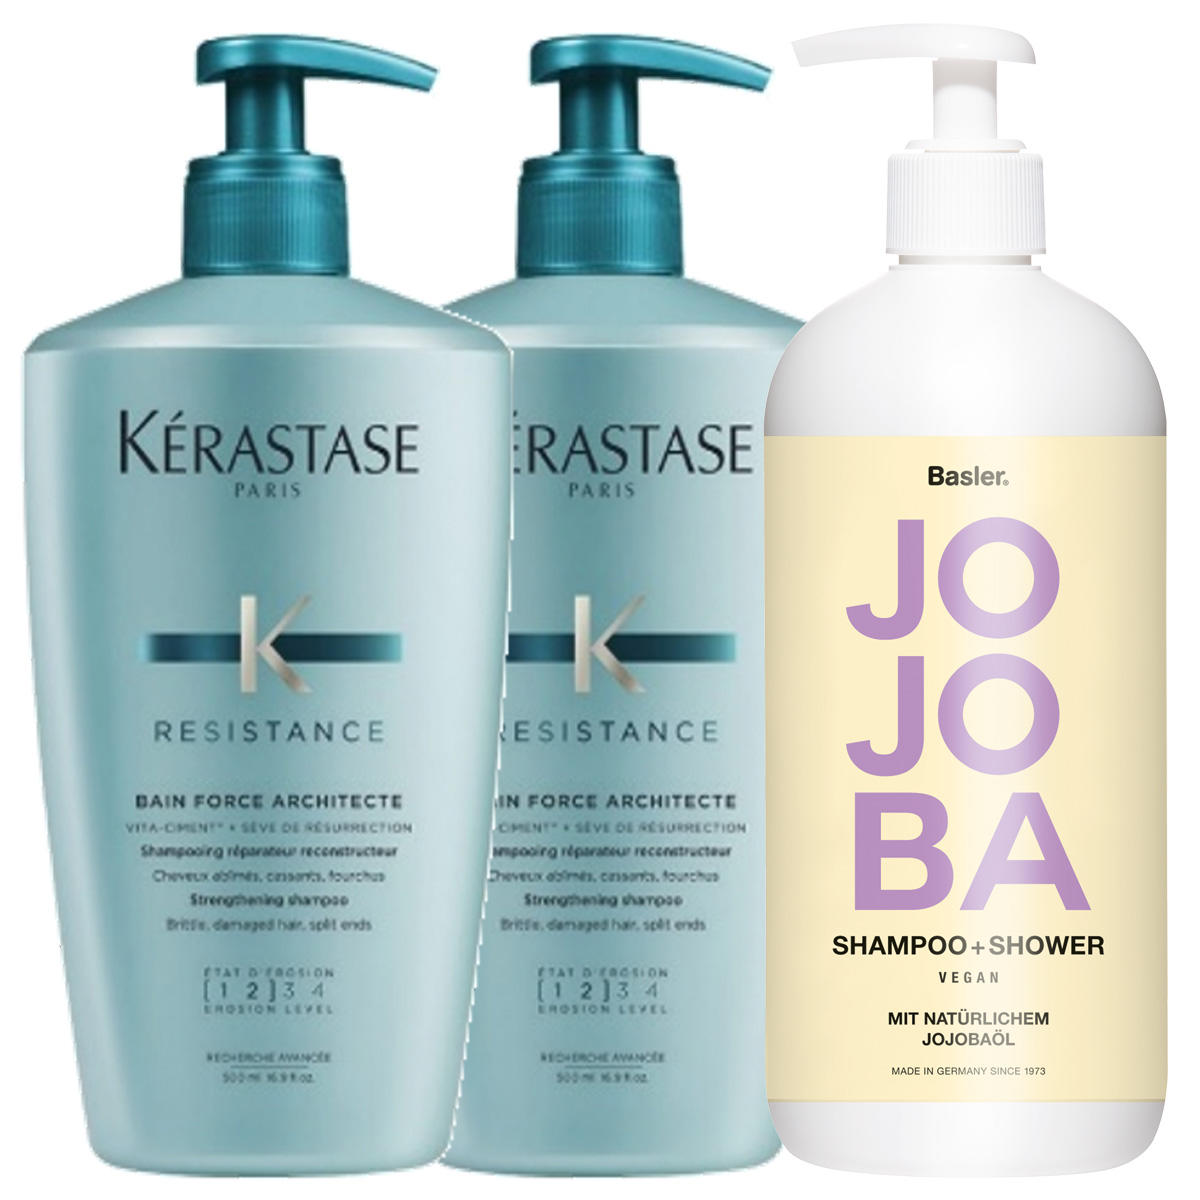 Kérastase Resistance Bain Force Architecte Bundle 2 x 500 ml + Basler Jojoba Shampoo & Shower 500 ml gratuito - 1